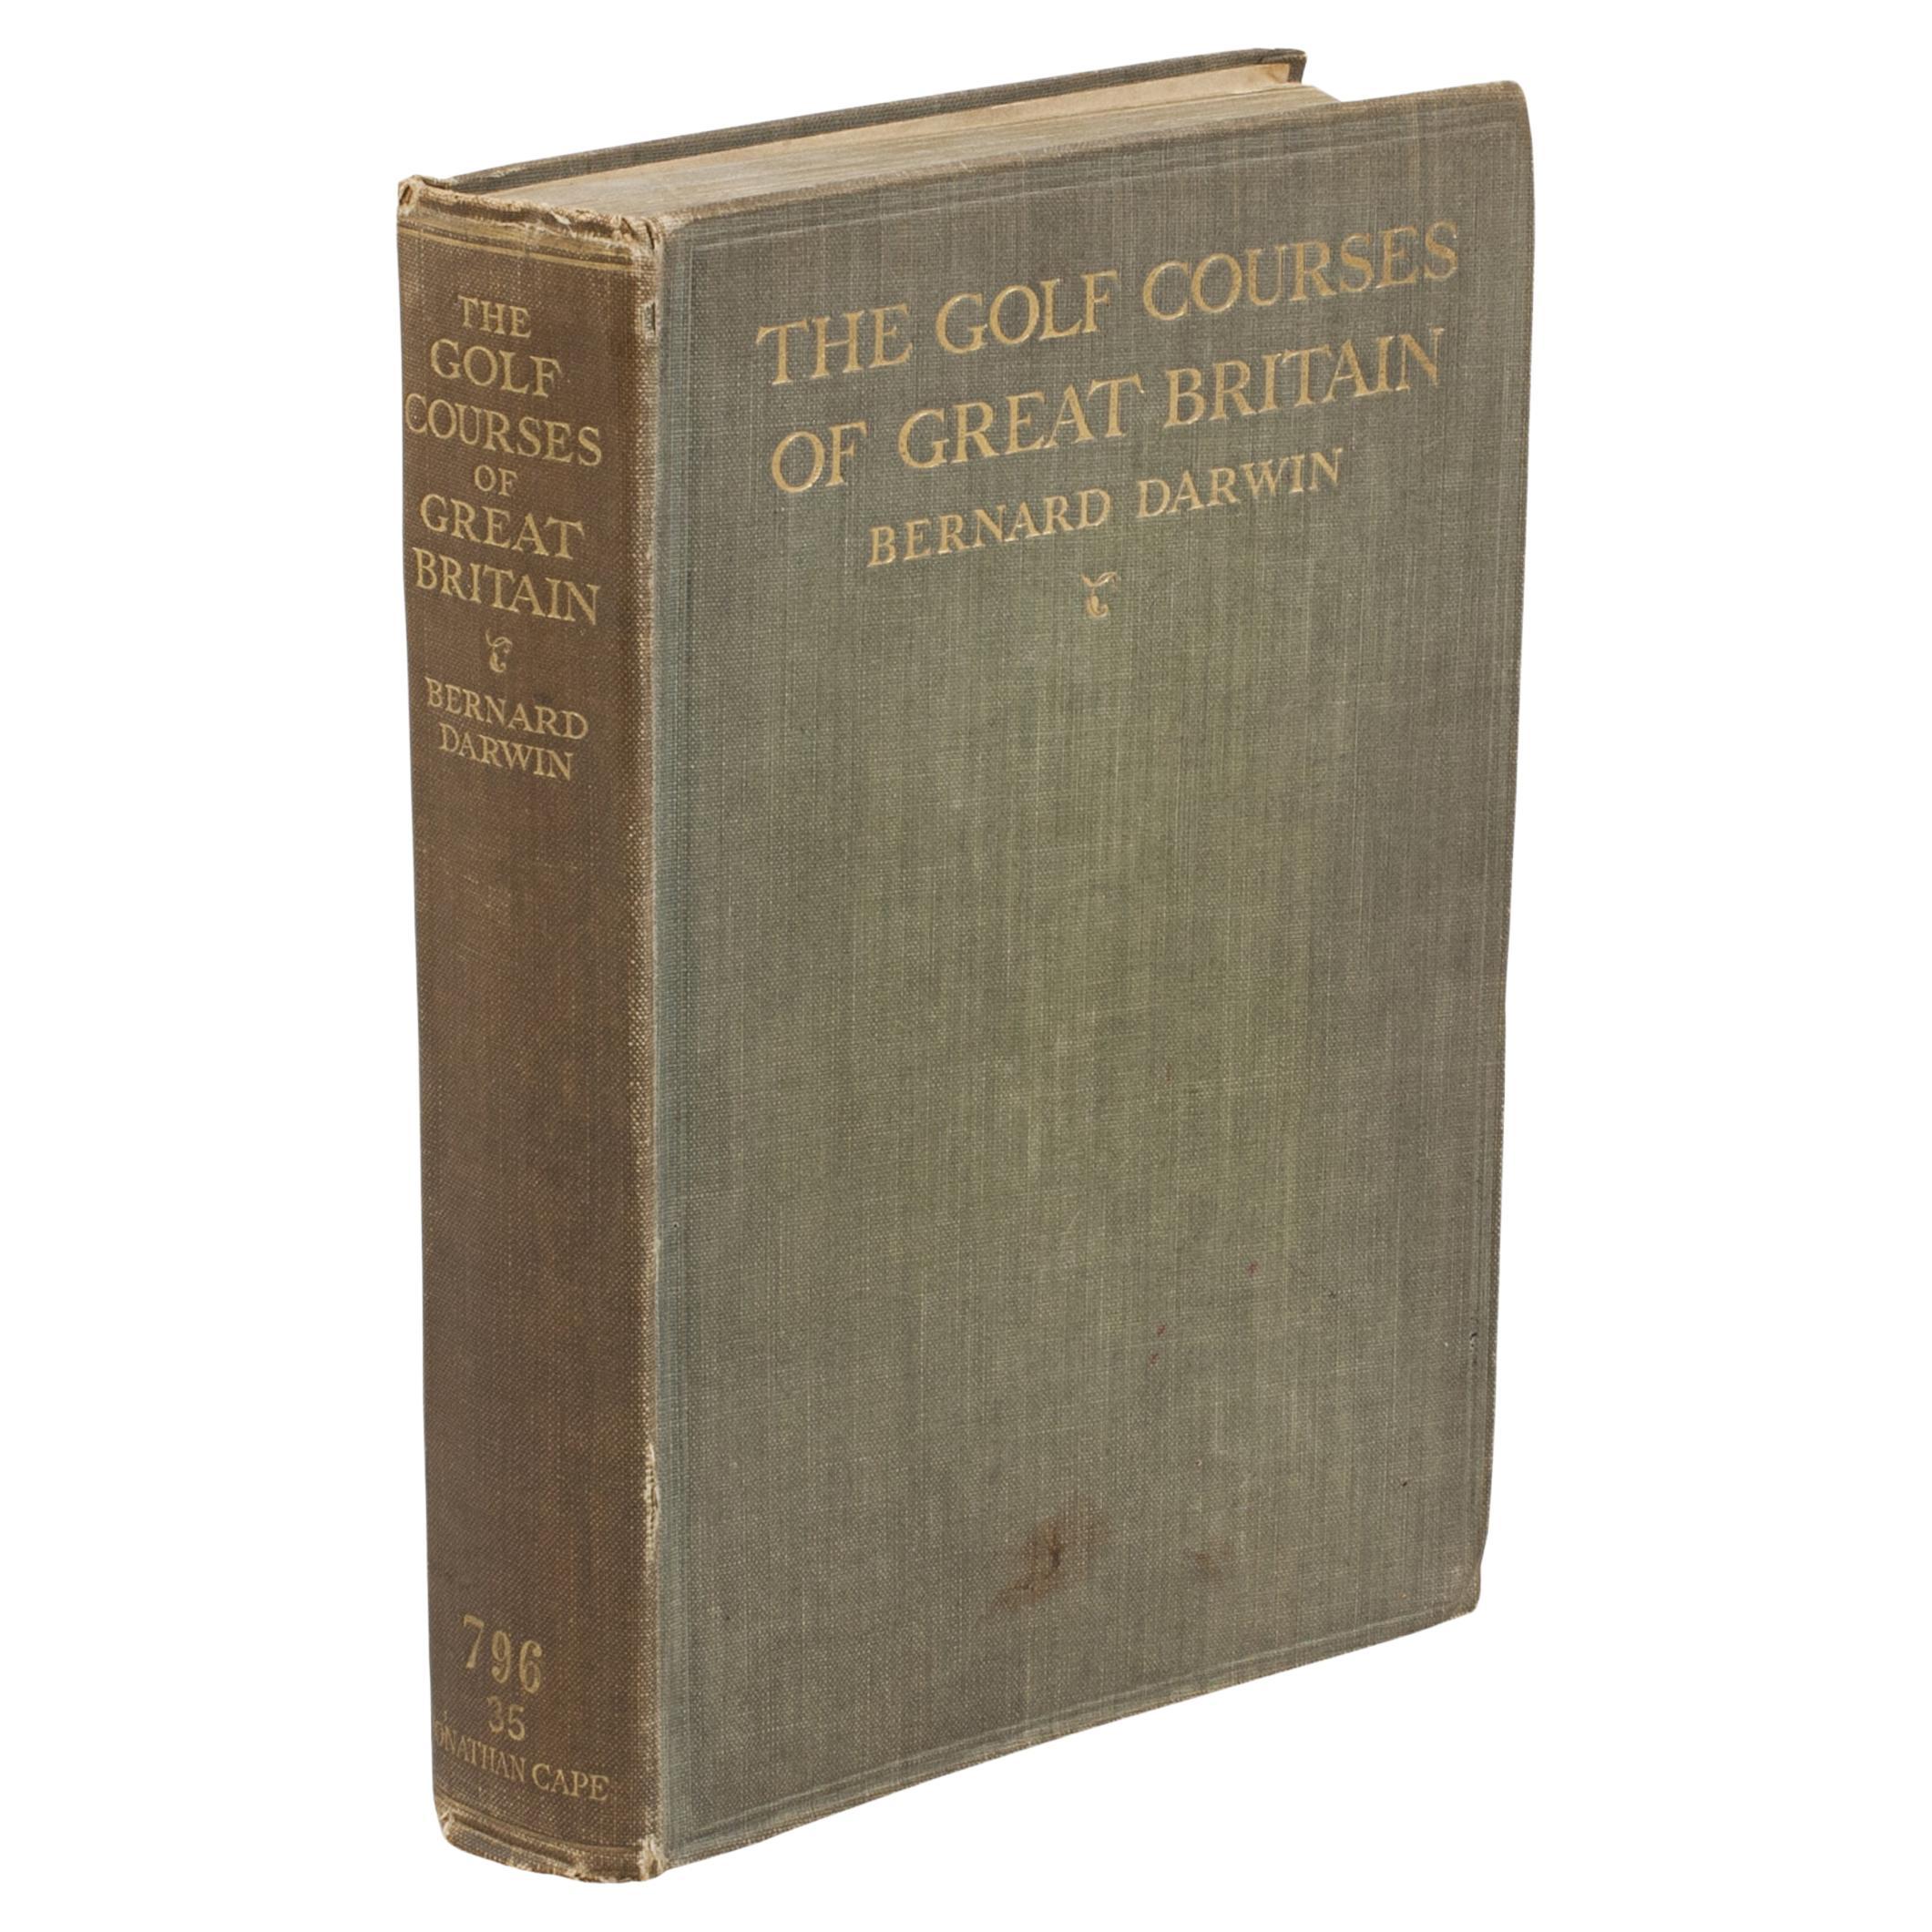 Livre de golf vintage, The Golf Courses of Great Britain, Bernard Darwin.